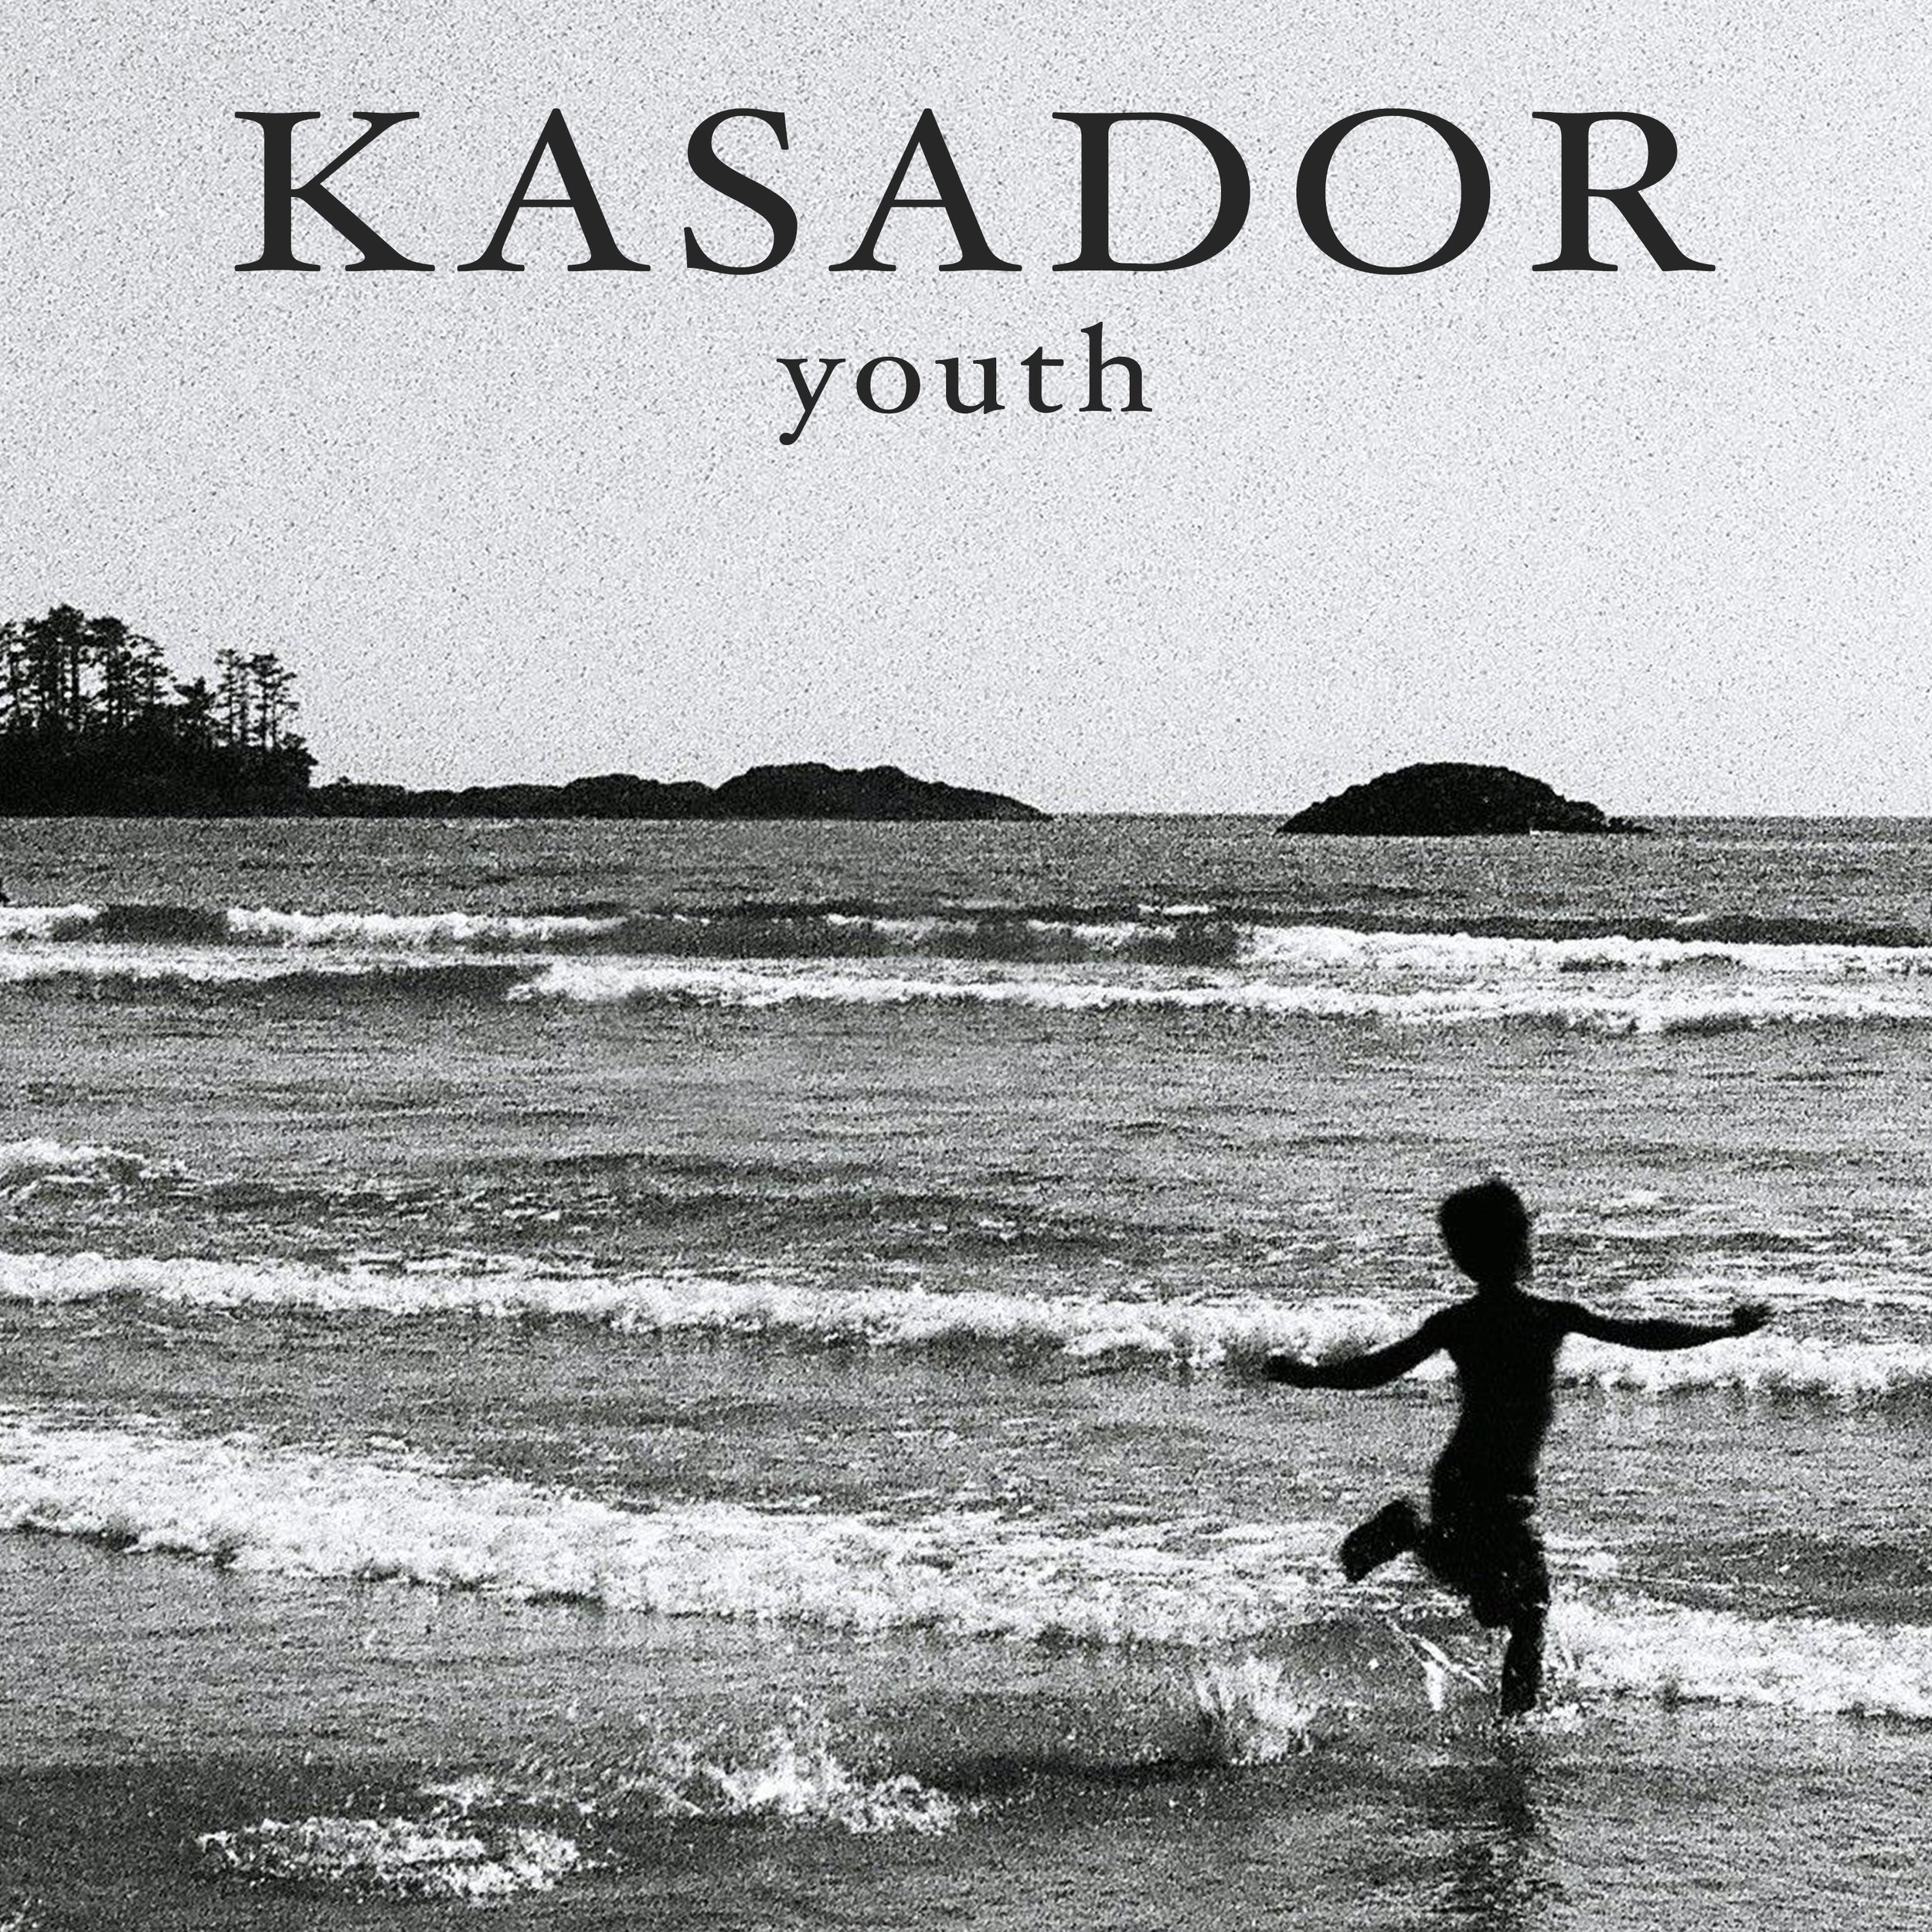 Youth_Single_Kasador.jpg